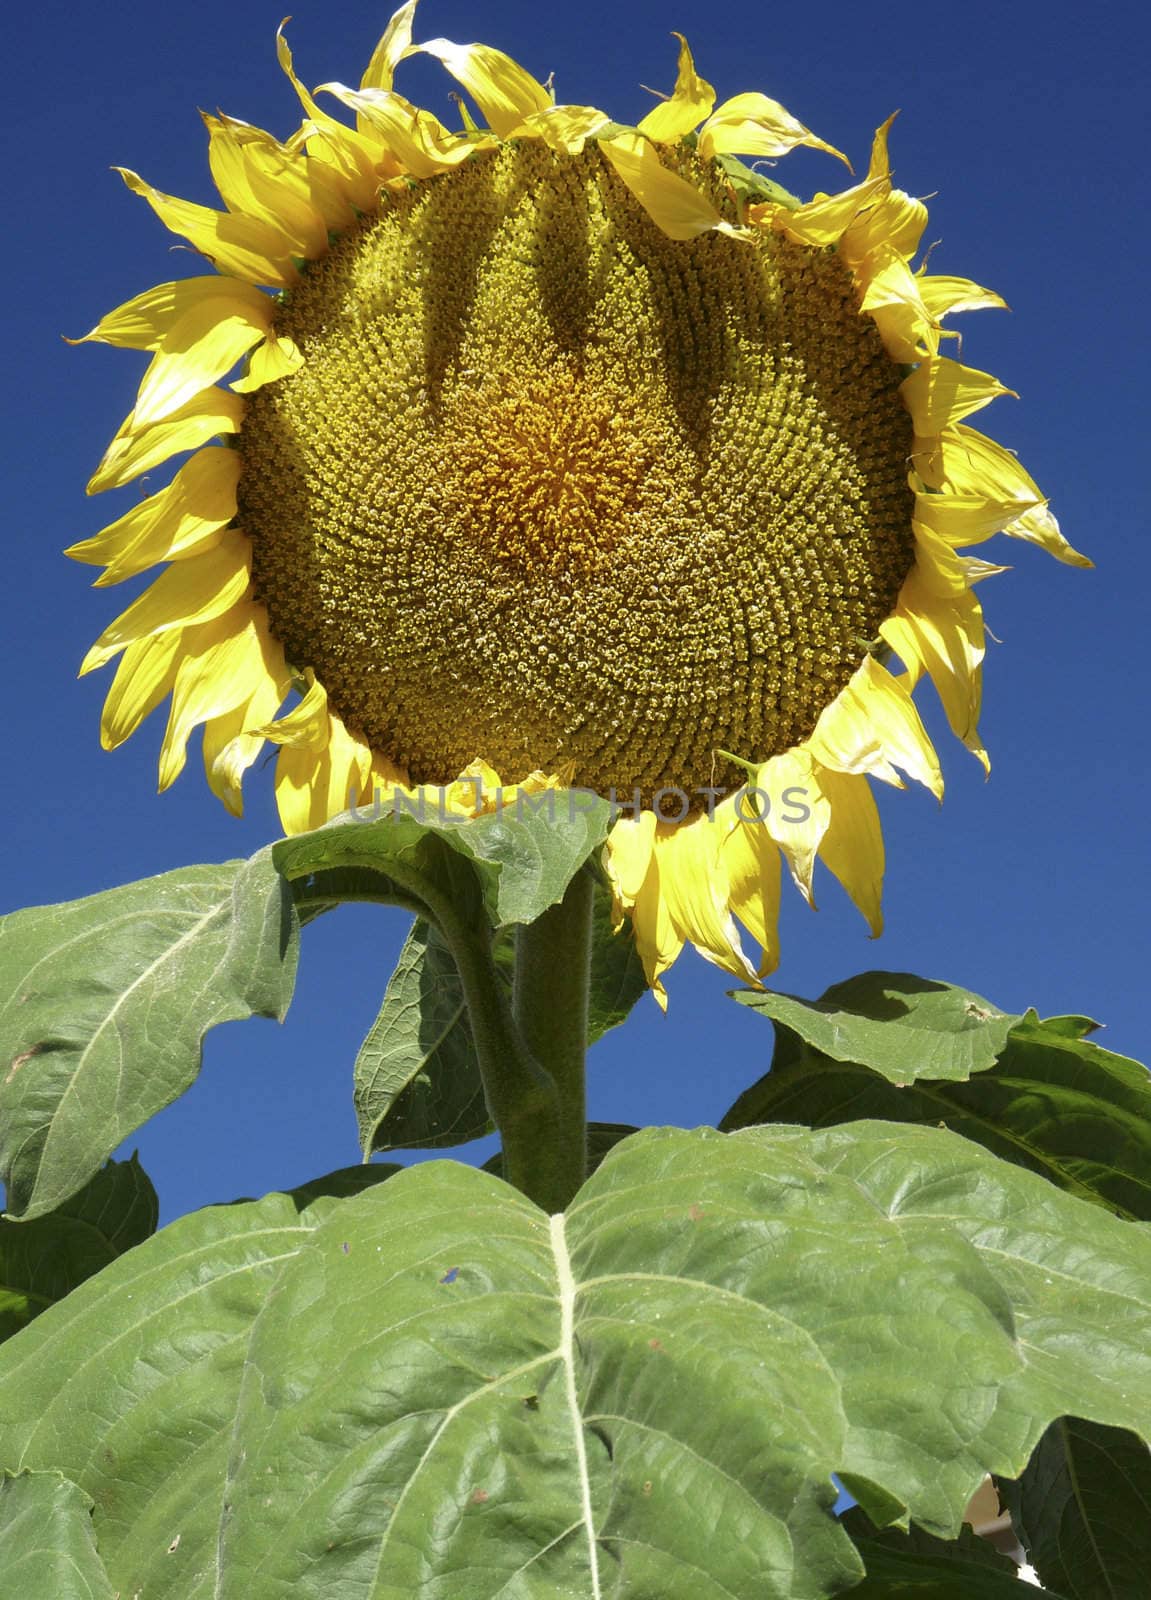 A huge sunflower against blue sky